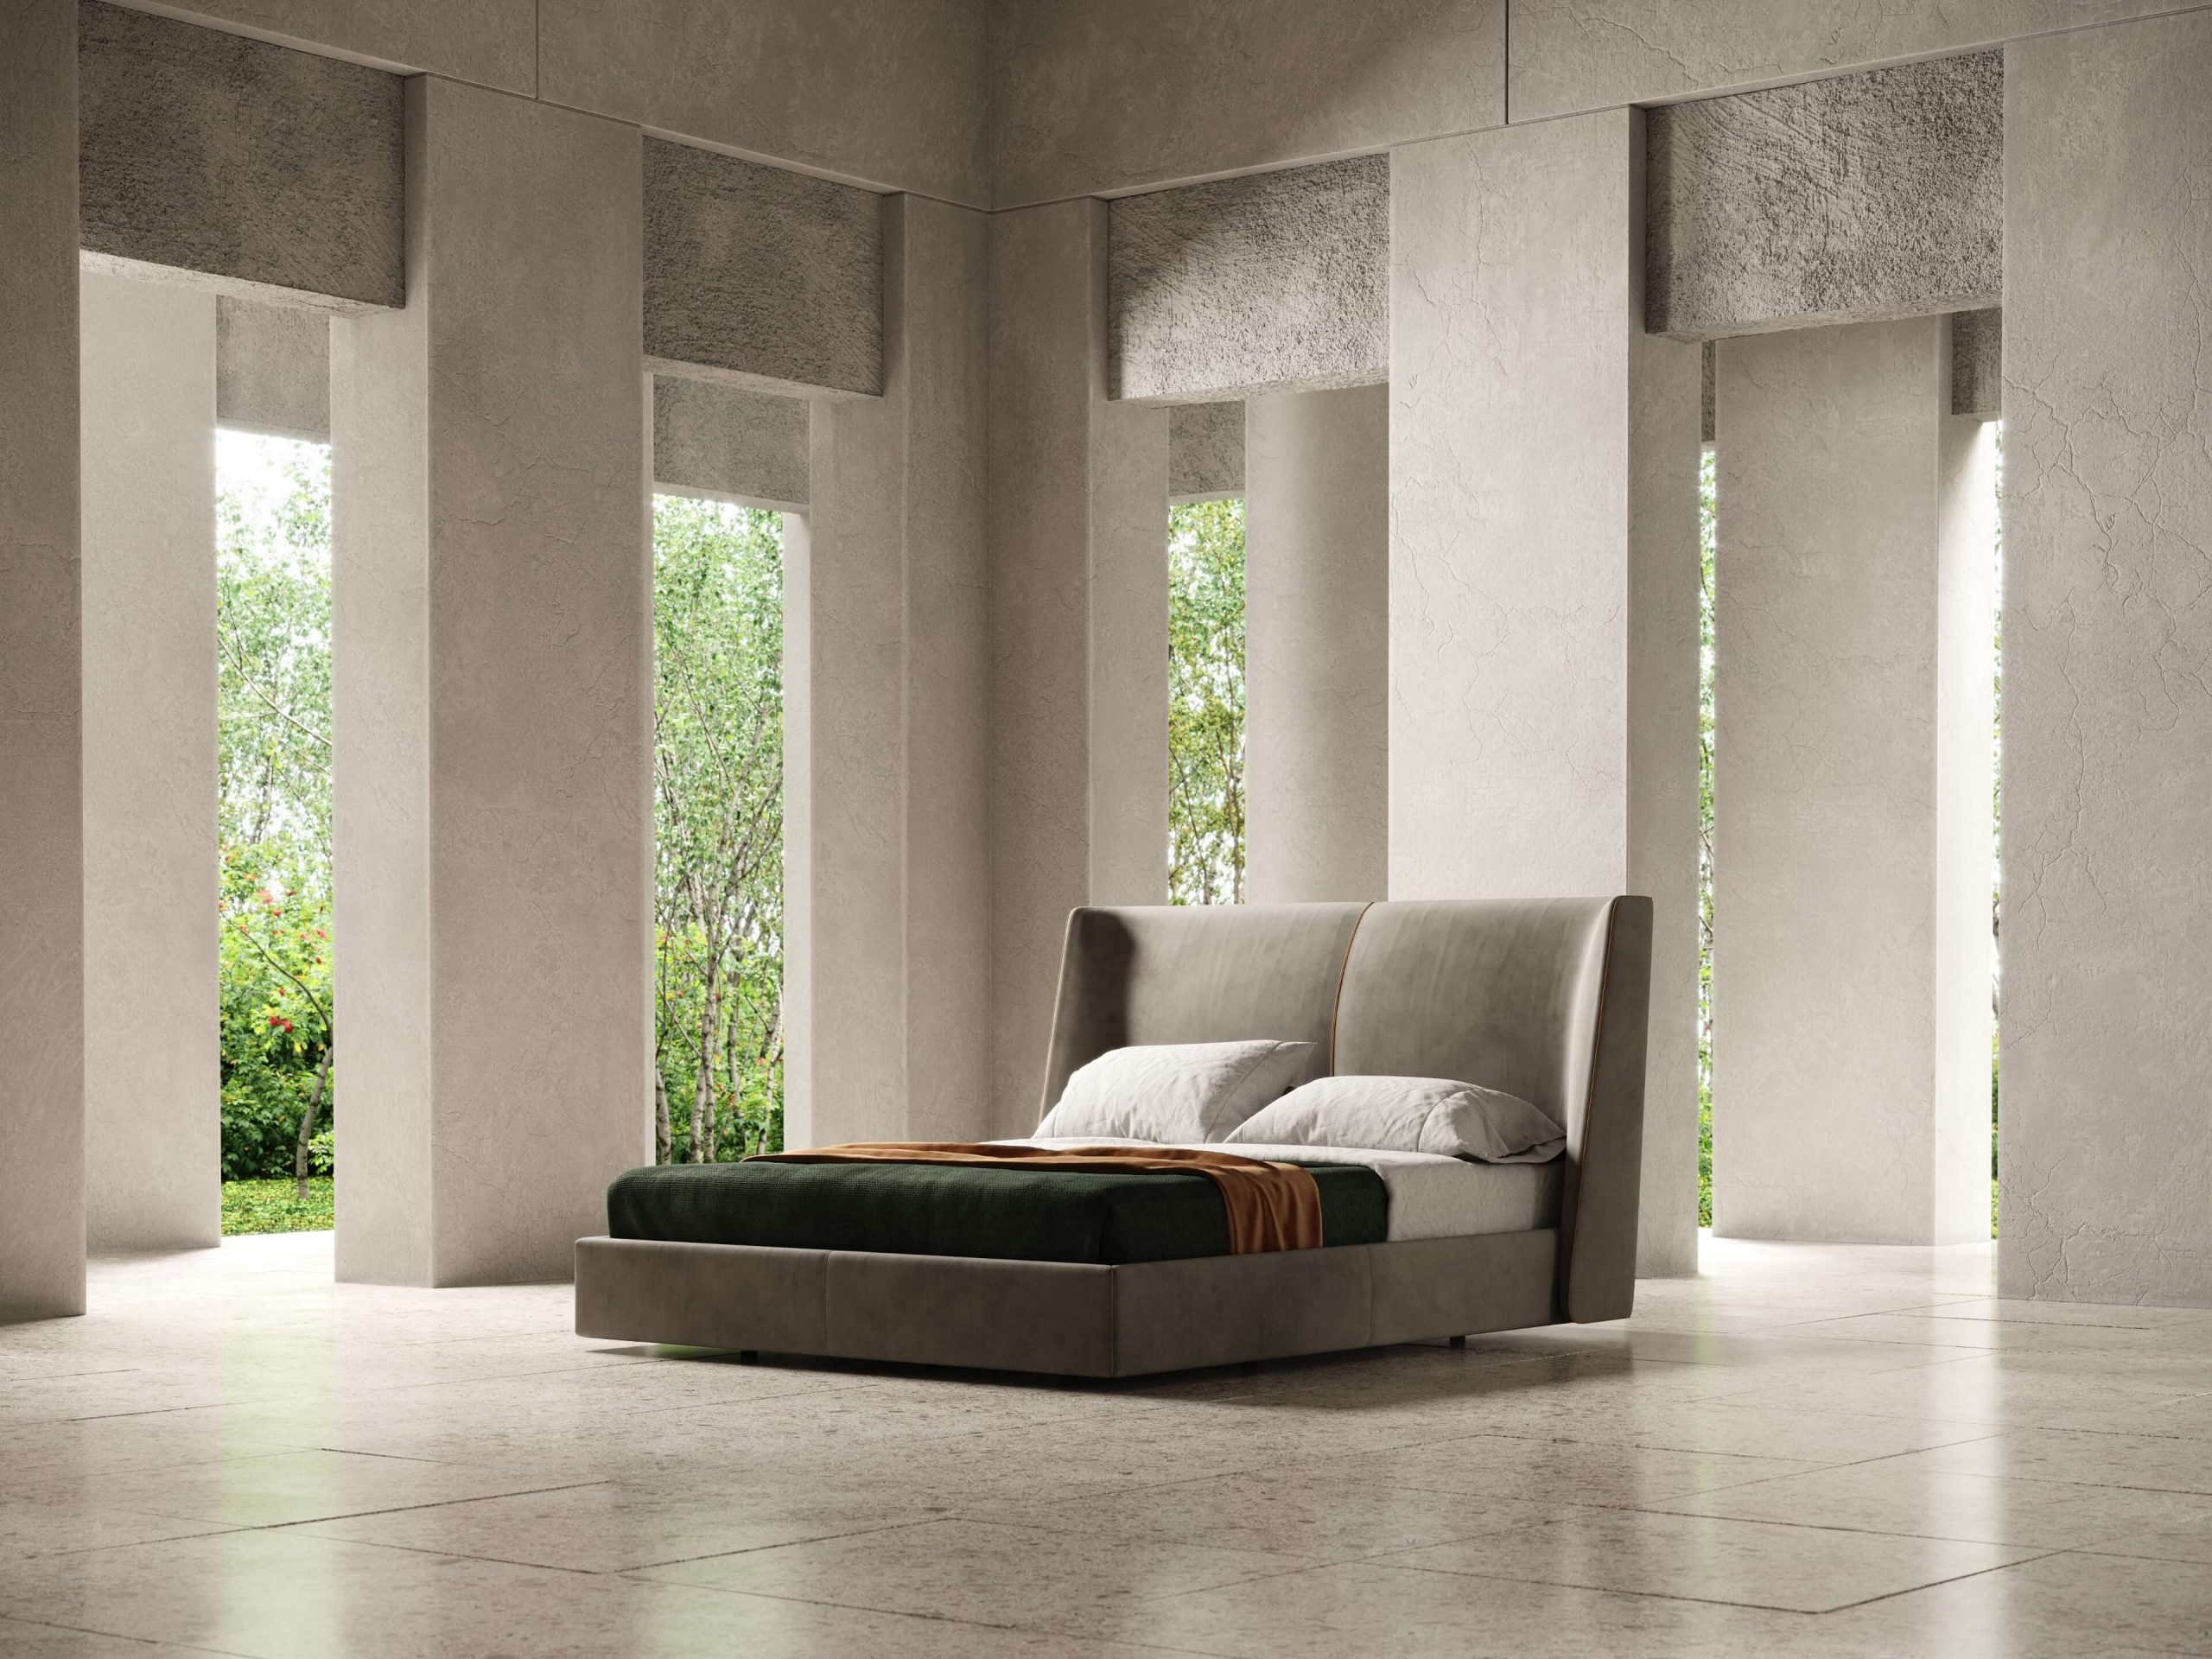 echo-bed-velvet-headboard-grey-velvet-master-bedroom-interior-design-ideas-furniture-domkapa